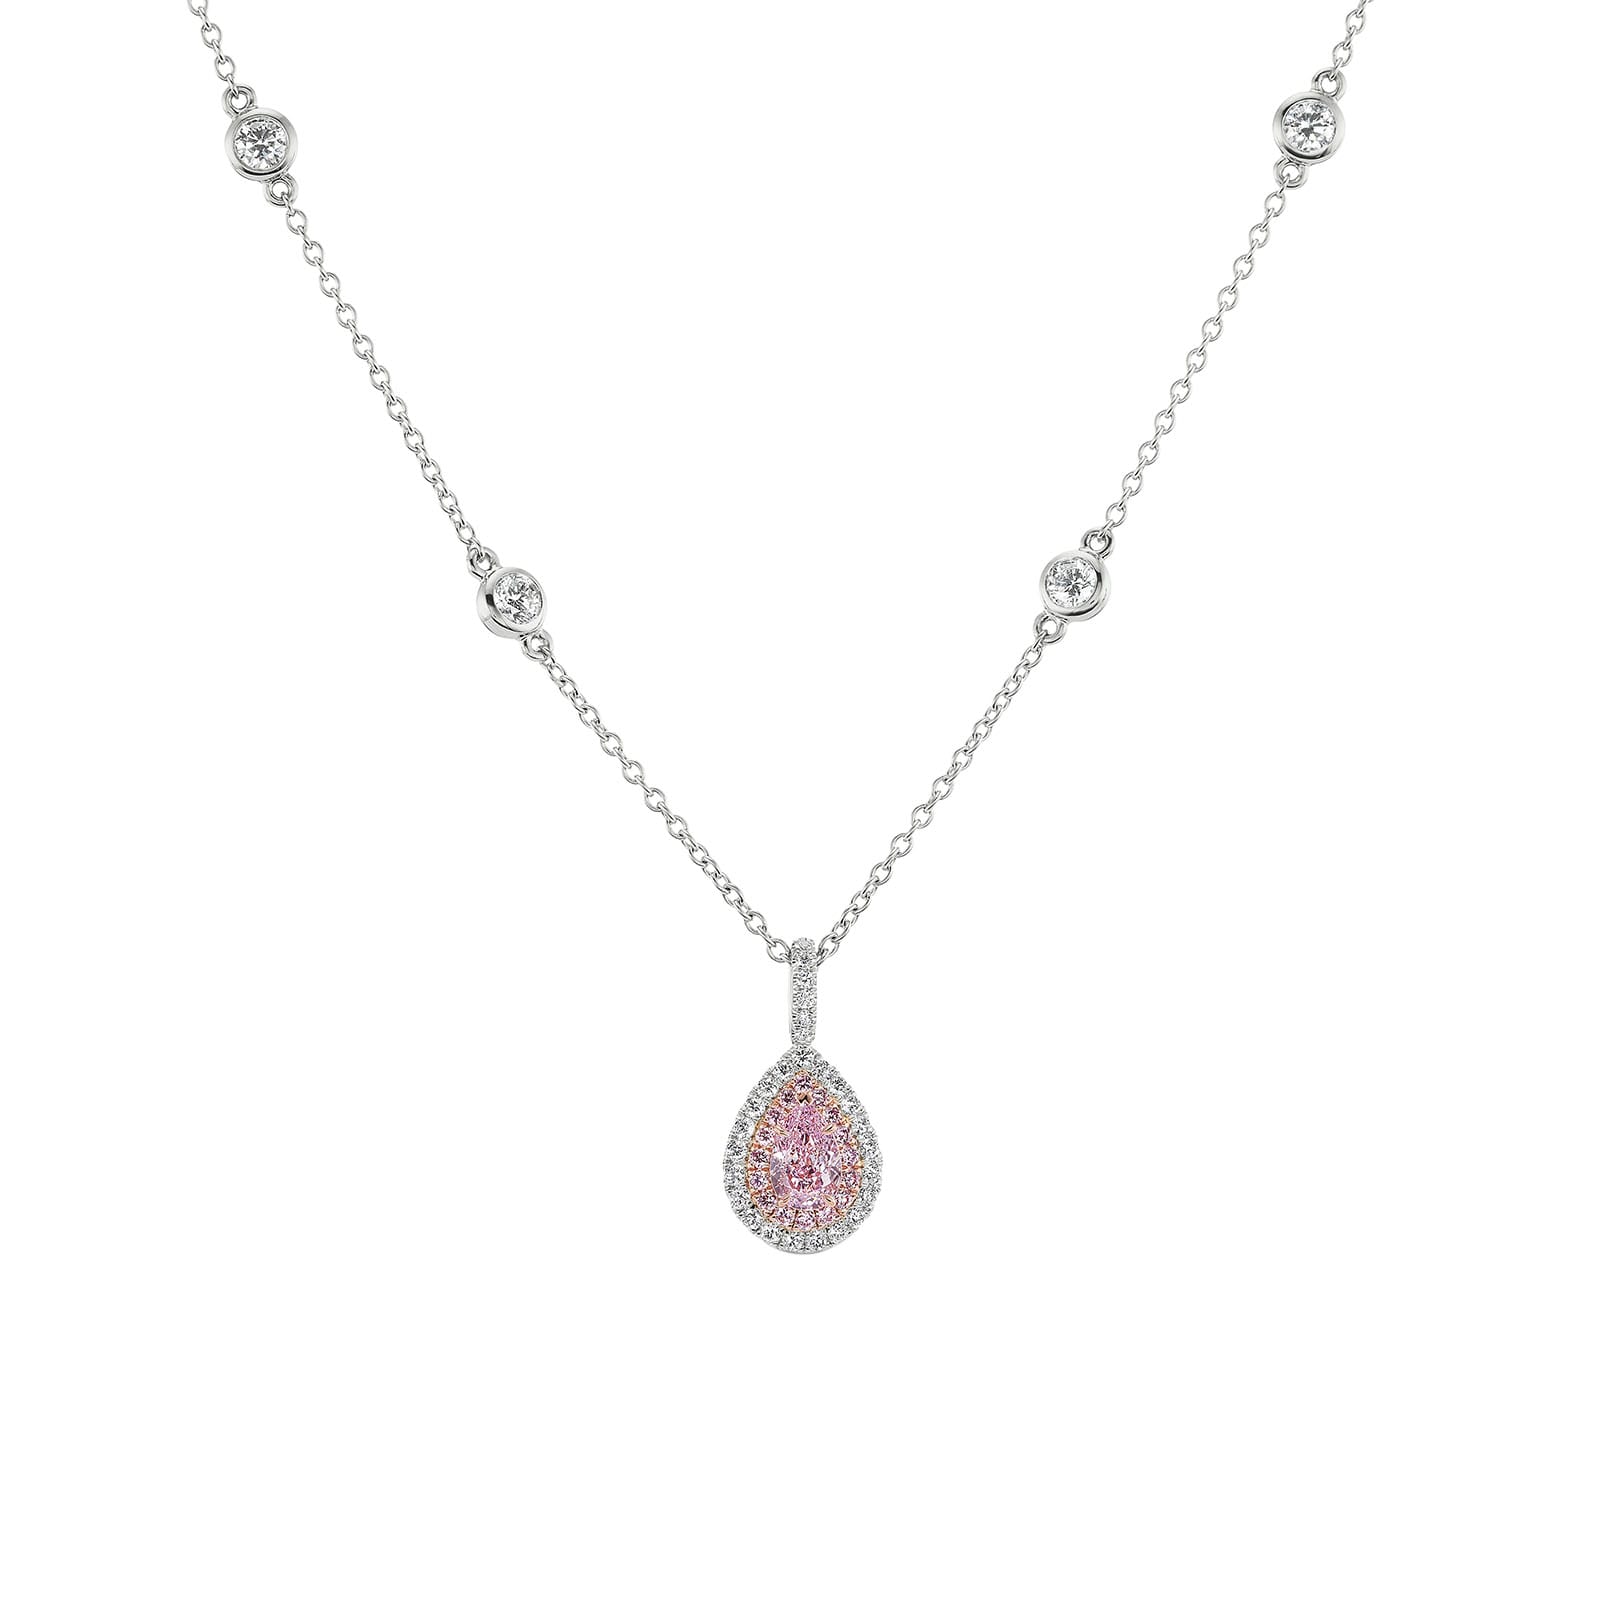 Pink diamond jewelry, Pink diamond necklaces, Bridal necklace designs